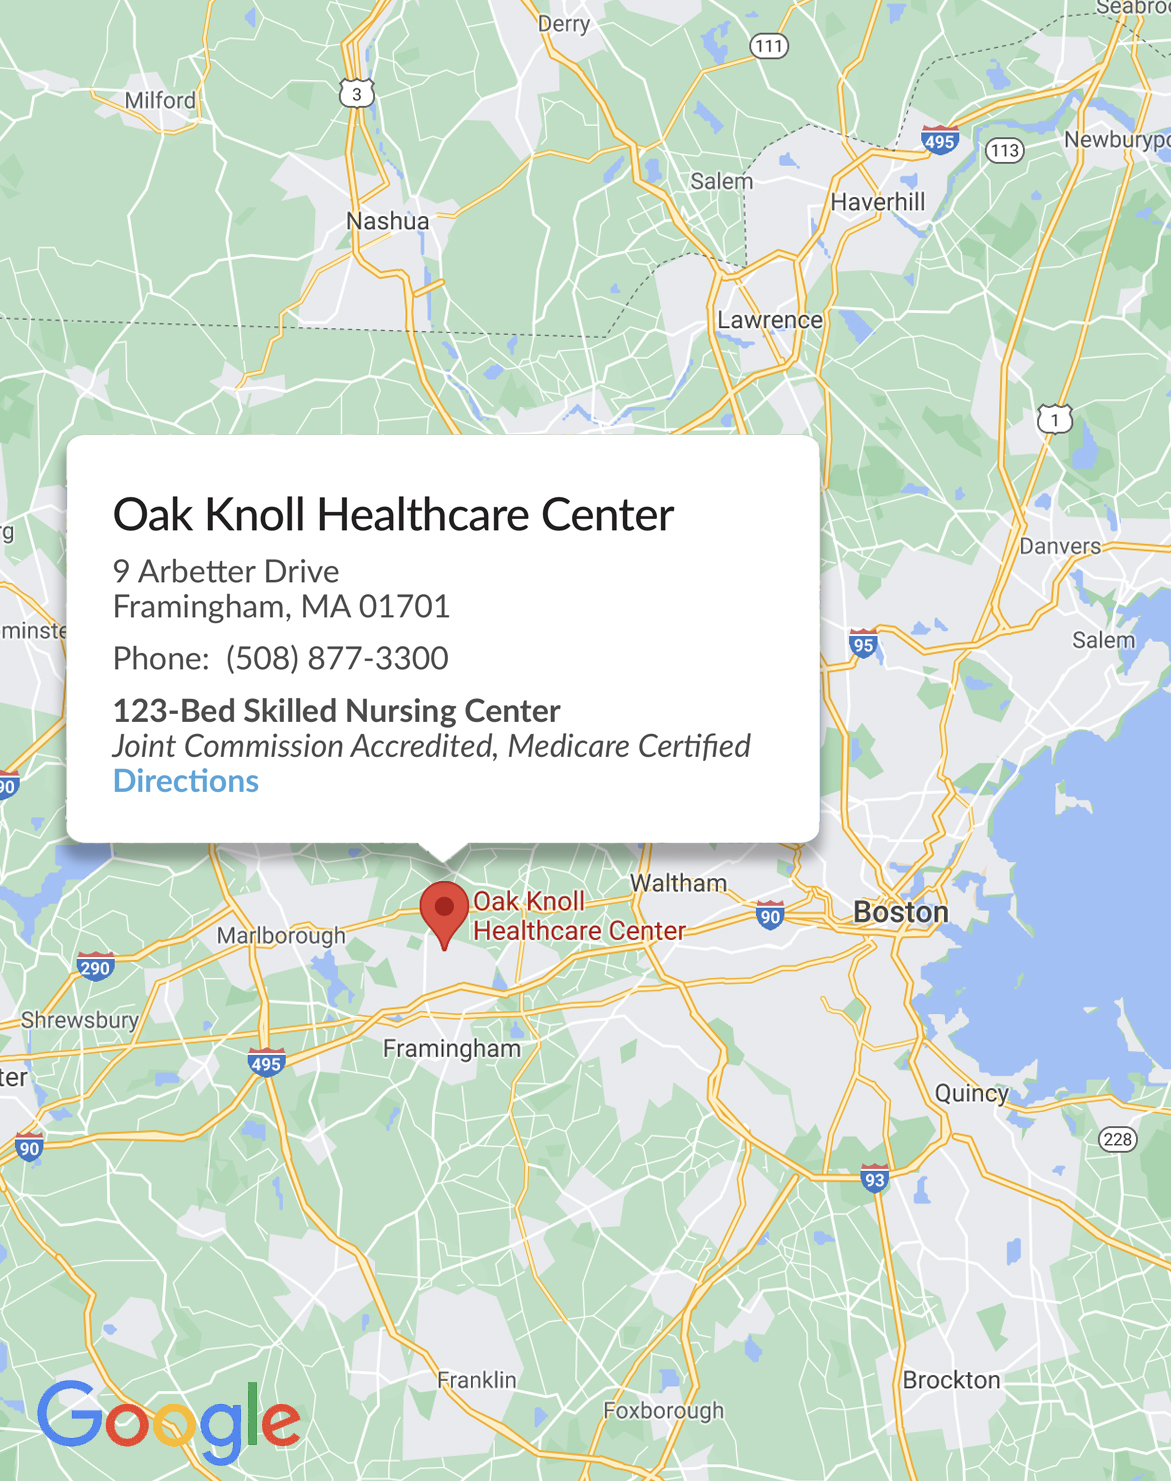 , Oak Knoll Healthcare Center Framingham, MA